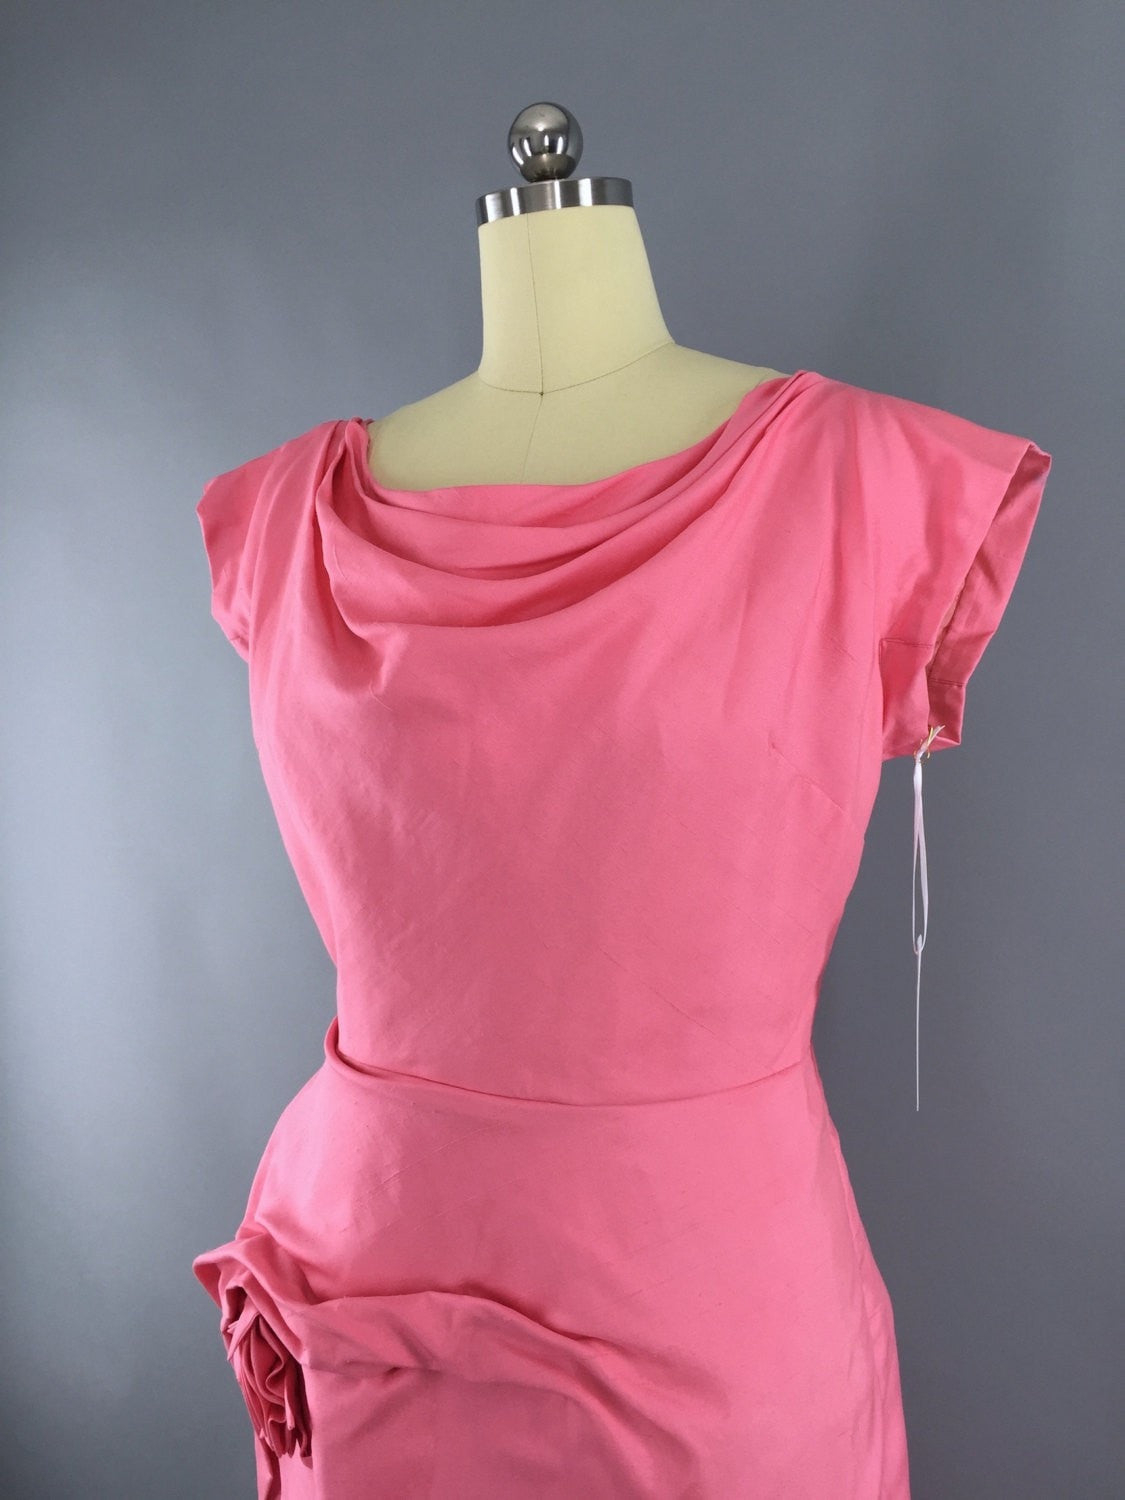 Vintage 1950s Dress / Bright Pink Silk Dress - ThisBlueBird